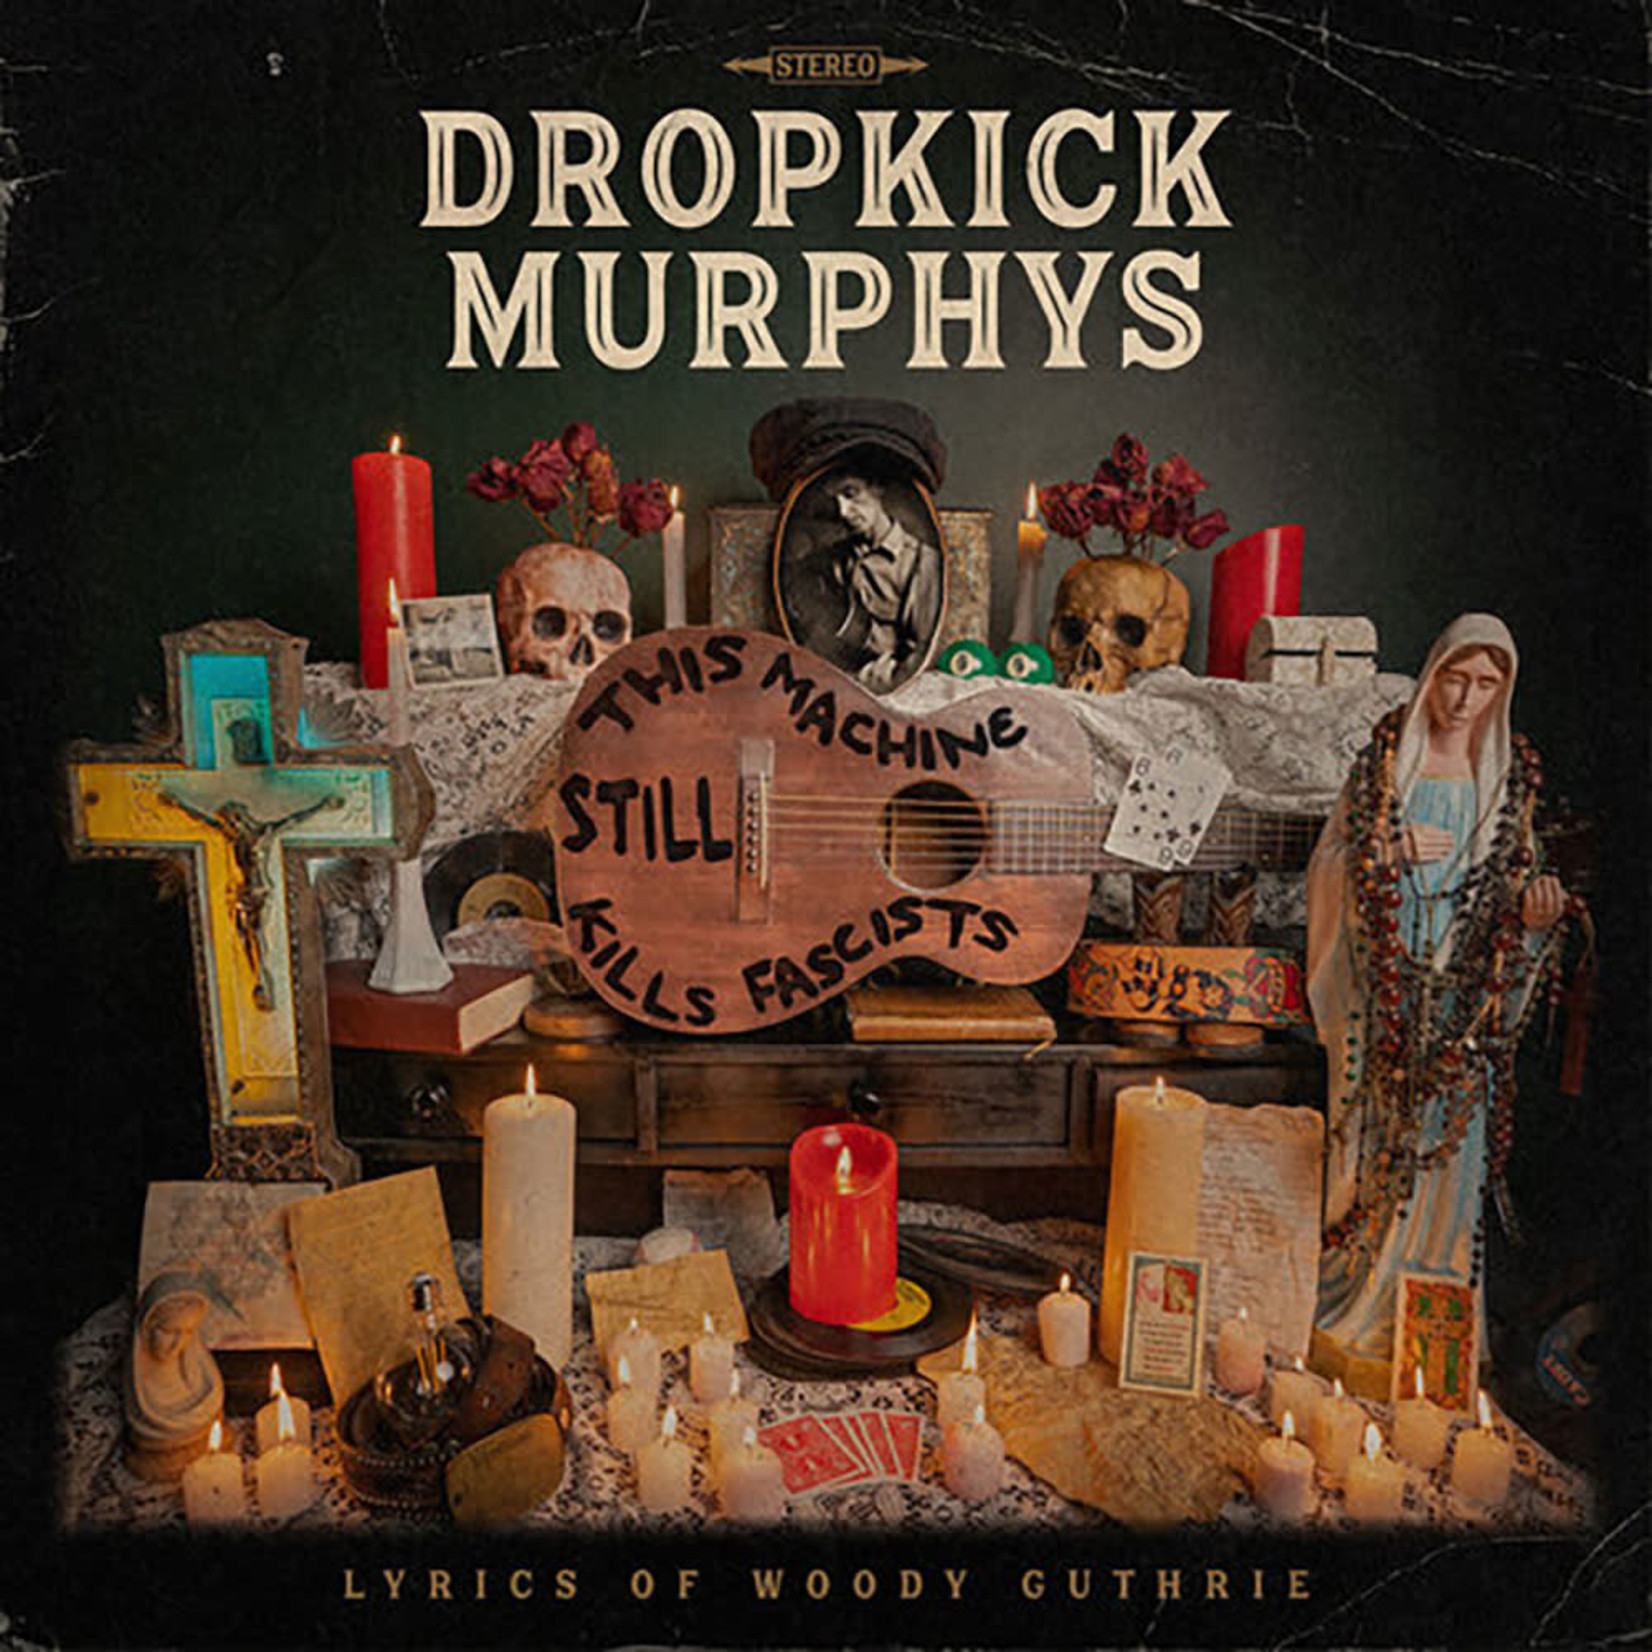 [New] Dropkick Murphys - This Machine Still Kills Fascists (indie exclusive, crystal vinyl)